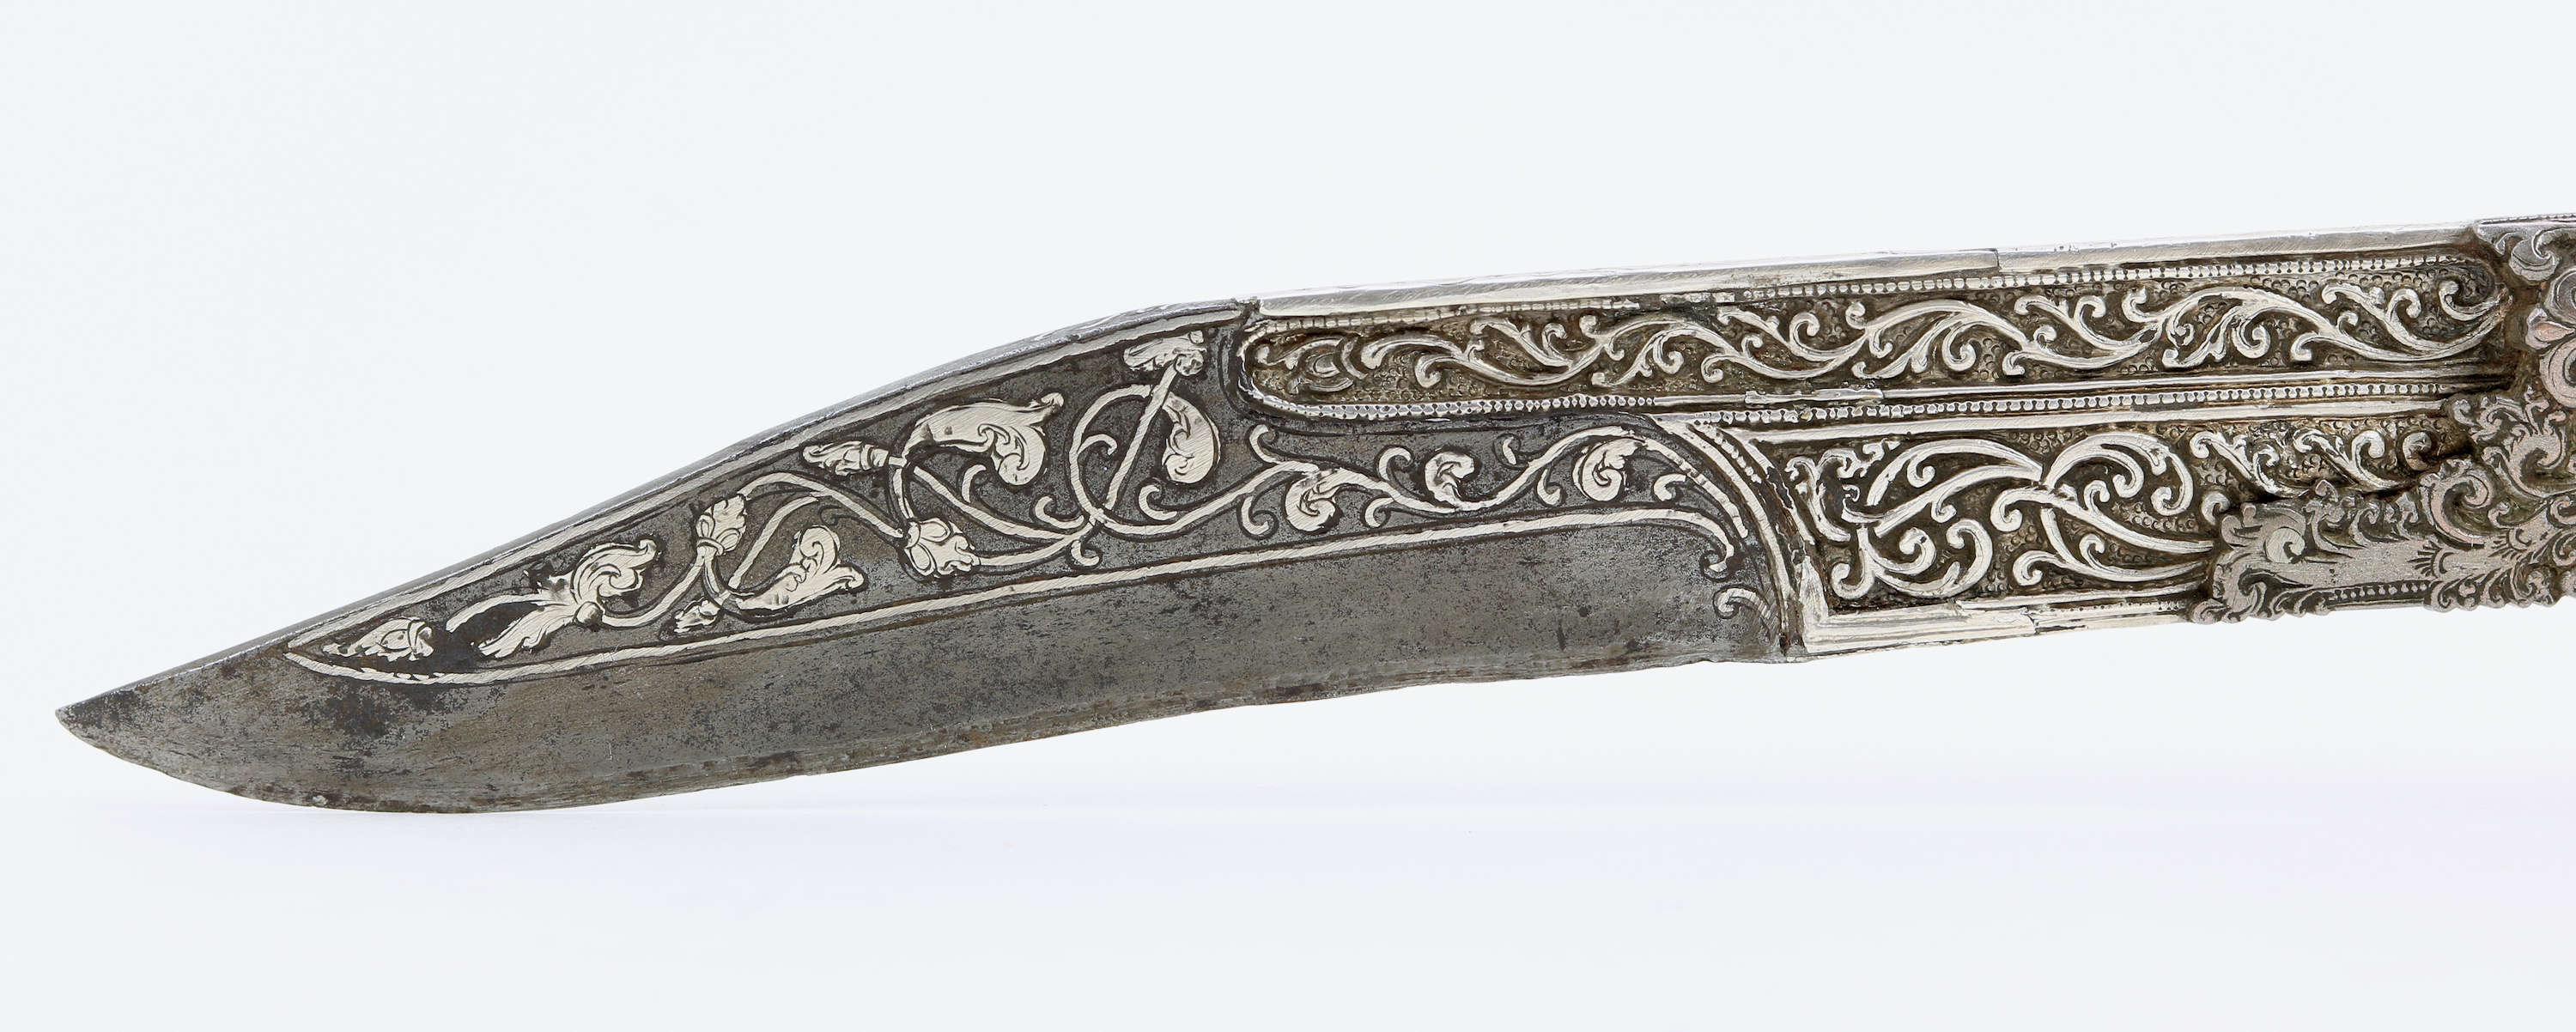 Antique Sinhalese knife